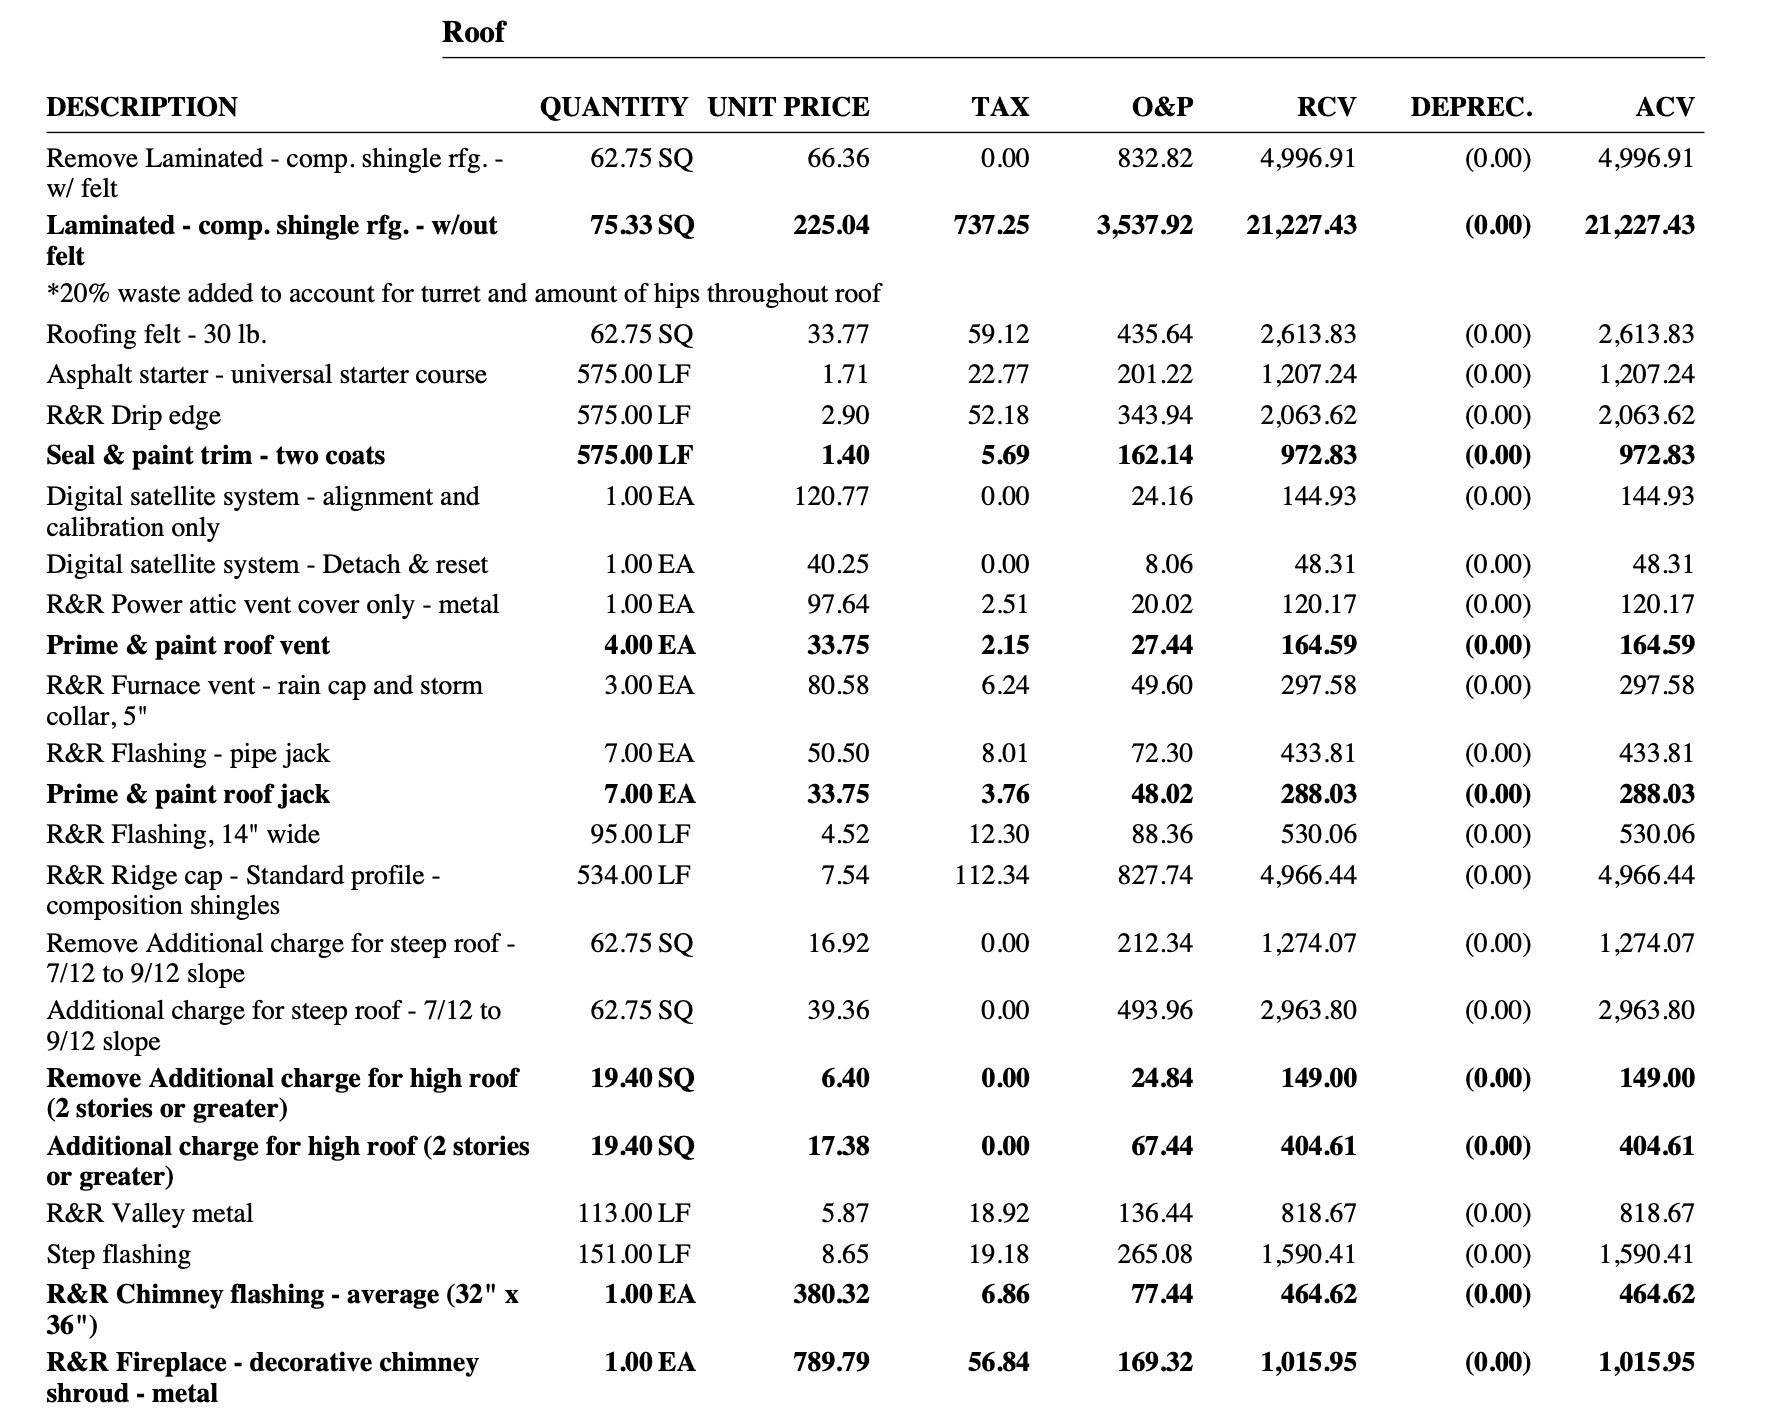 Supplemental Estimates spreadsheet detail